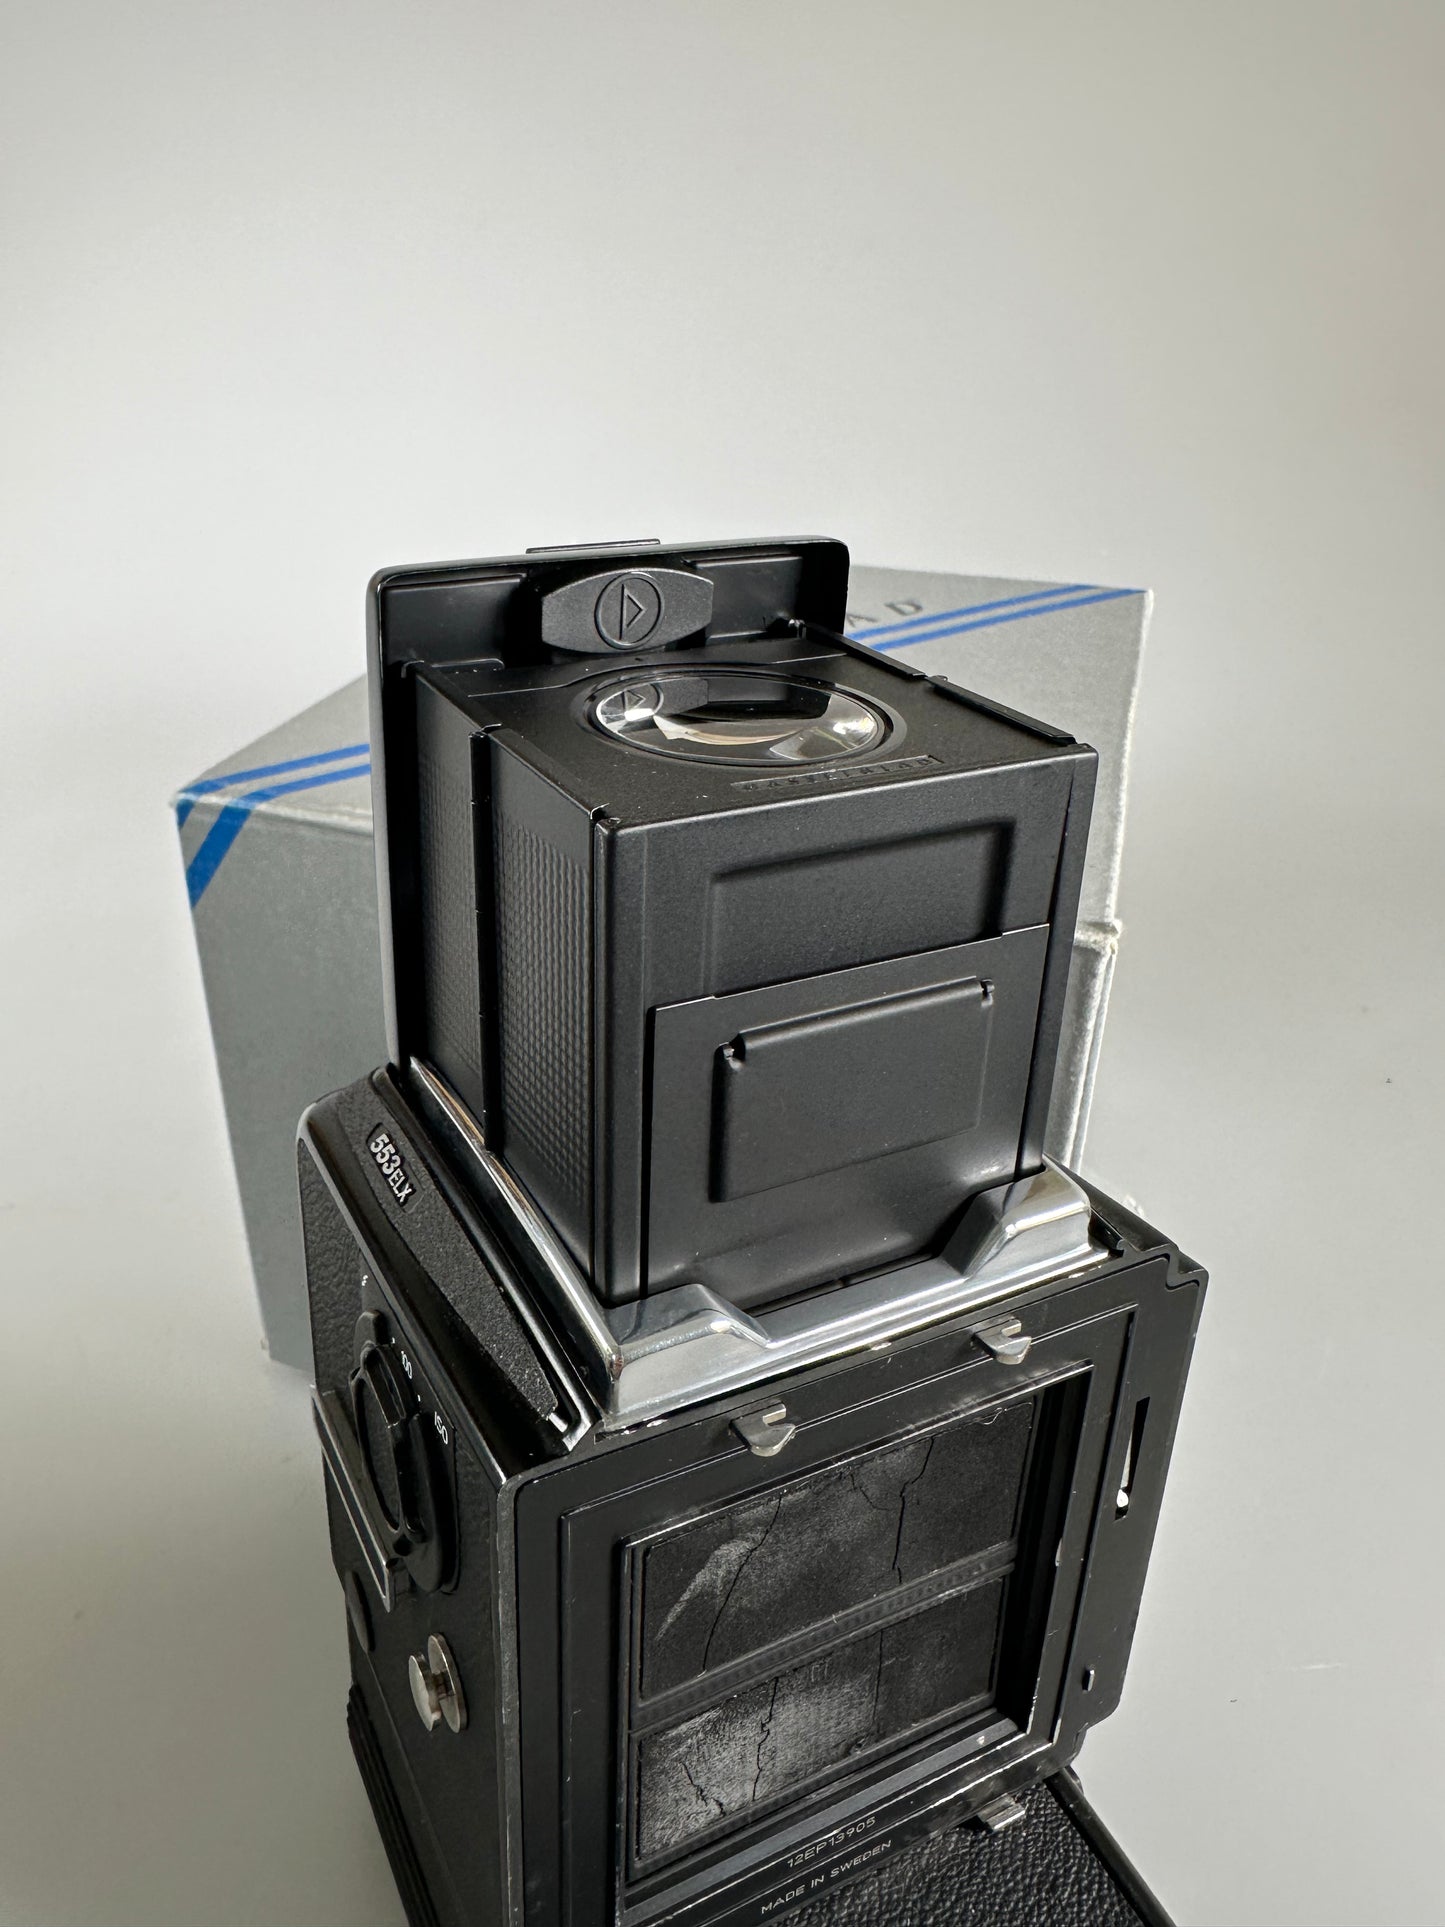 Hasselblad 553ELX 553 ELX Black Medium Format Film Camera Body w/ Waist level finder